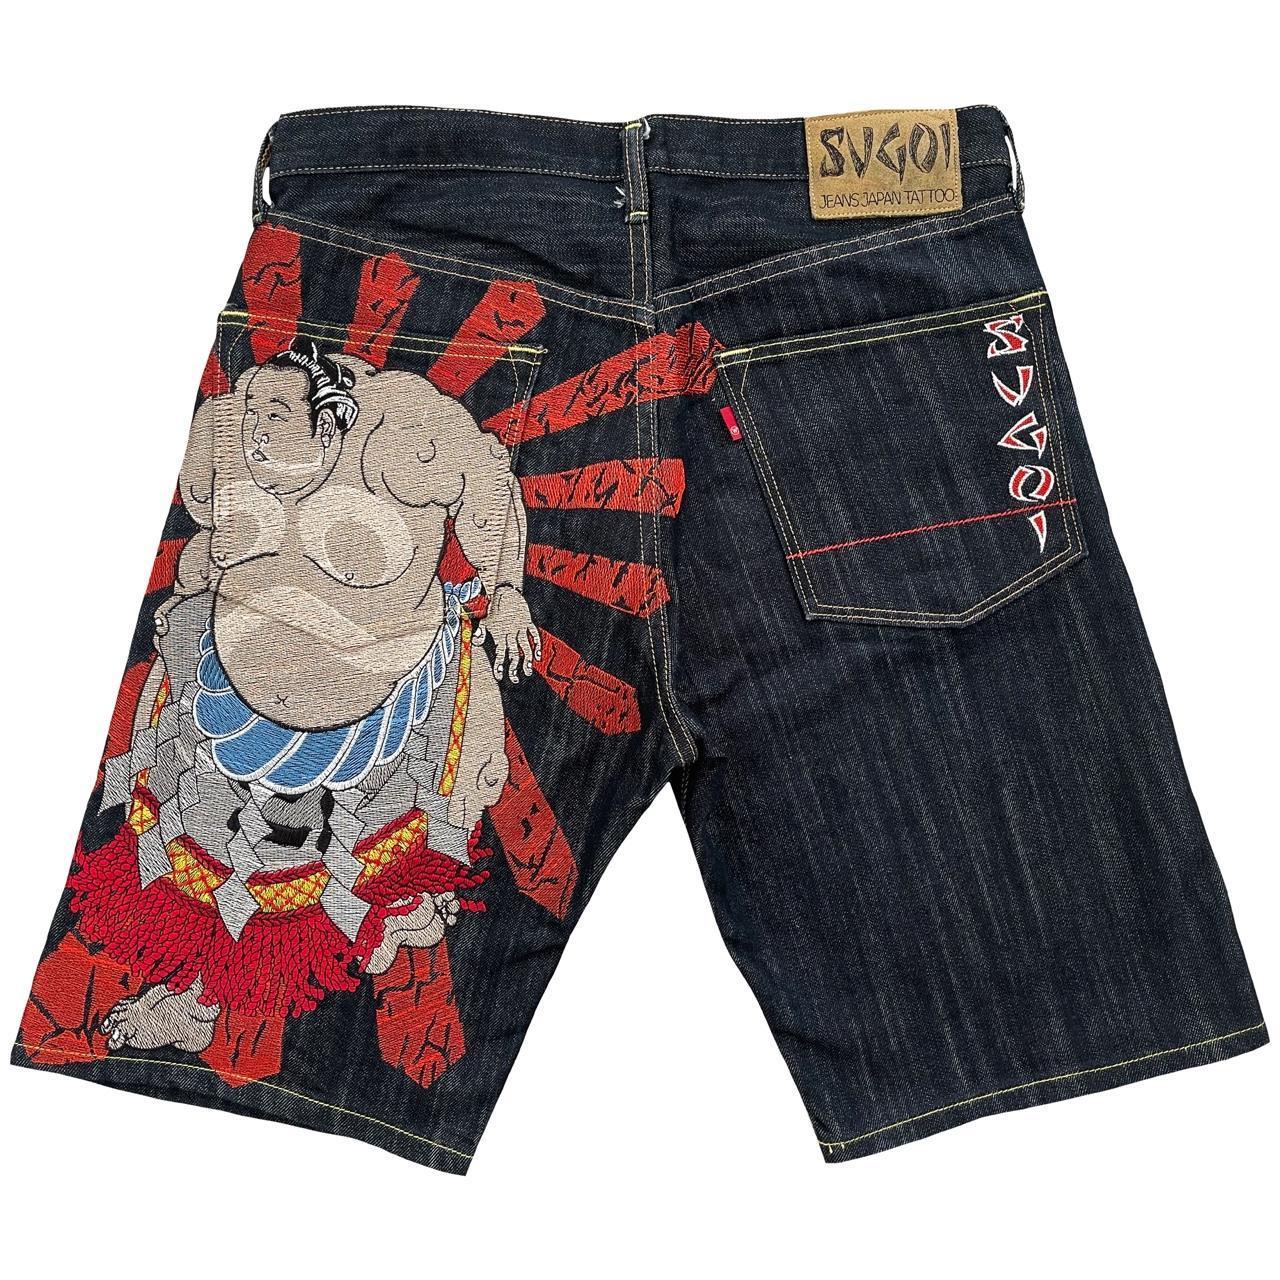 Sugoi Denim Shorts - Known Source